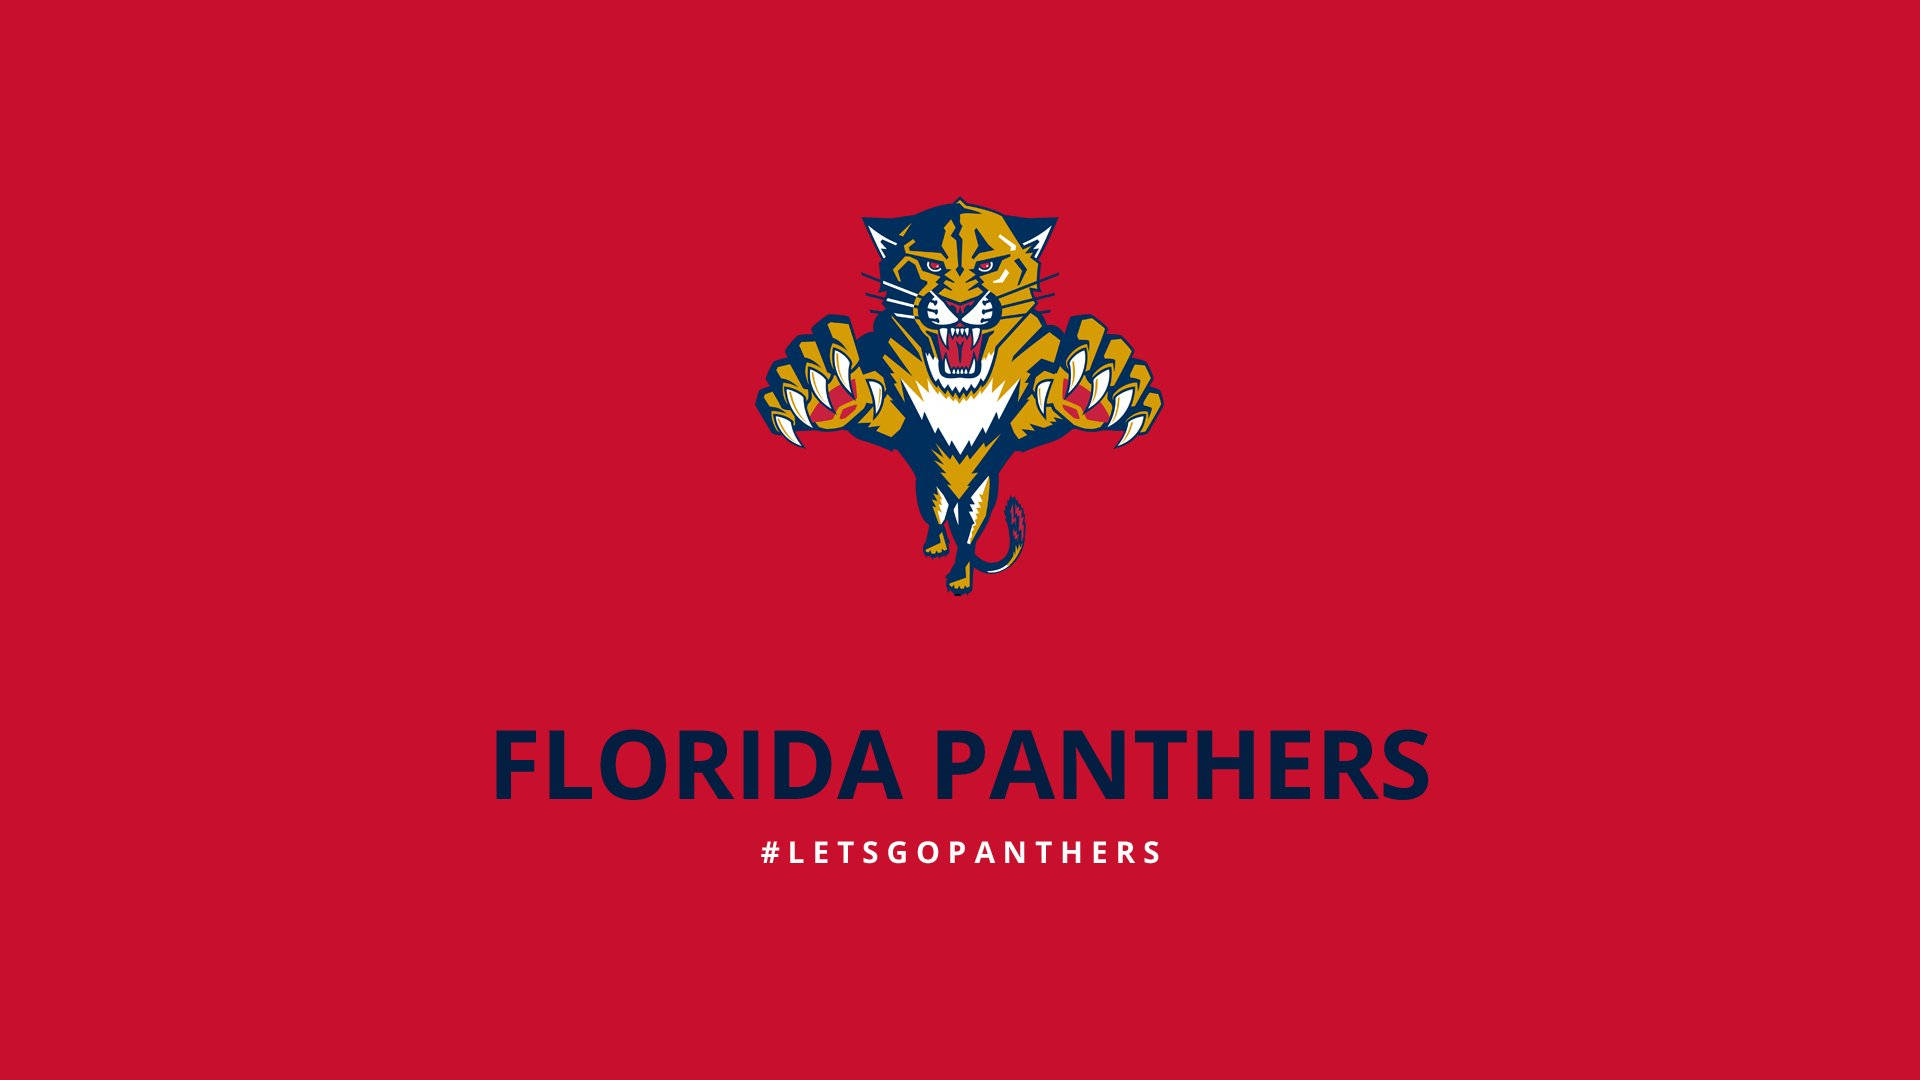 Top 999+ Florida Panthers Wallpaper Full HD, 4K Free to Use